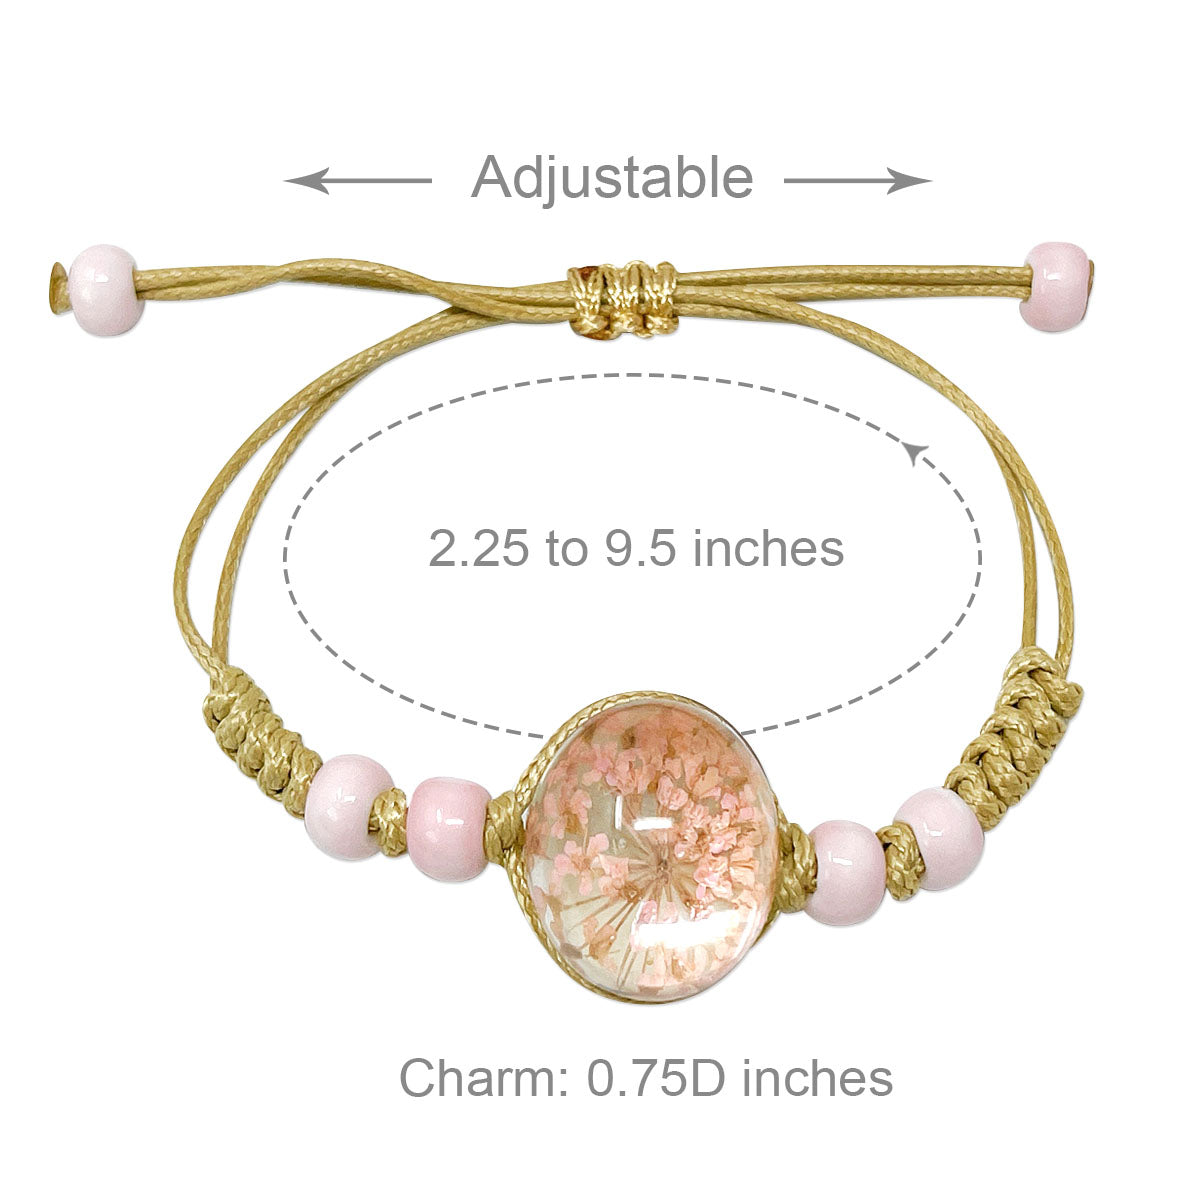 Wrapables Friendship Beaded Enamel Charm Bracelet Pink Crown Bunny Crystal Beads